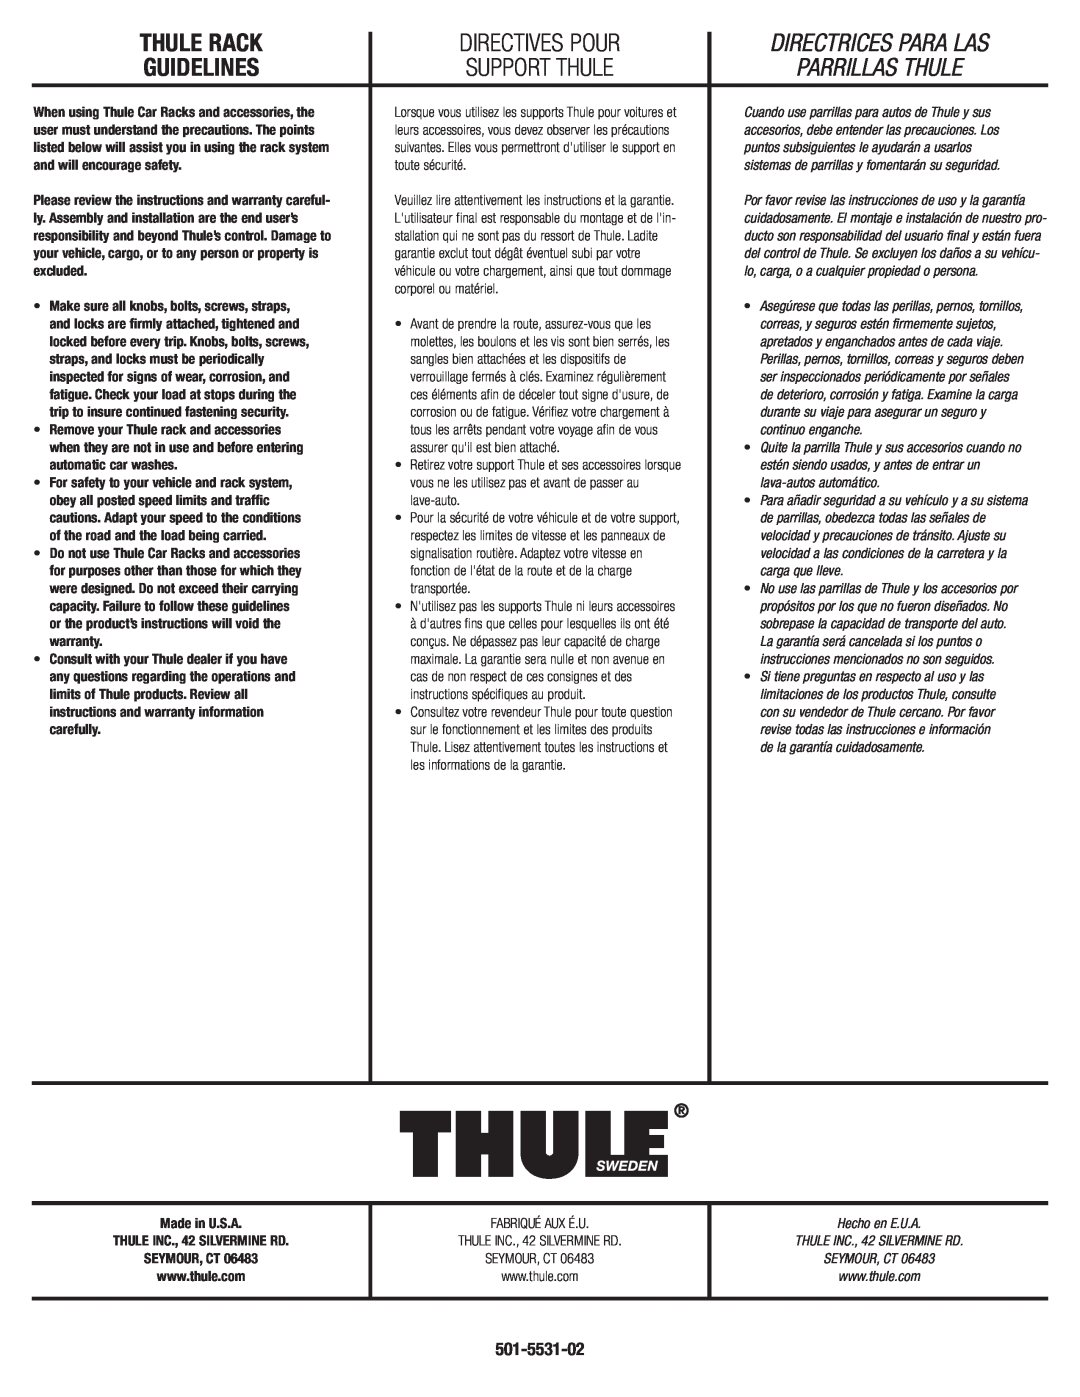 Thule TK12 Directrices Para Las, 501-5531-02, Thule Rack, Directives Pour, Guidelines, Support Thule, Parrillas Thule 